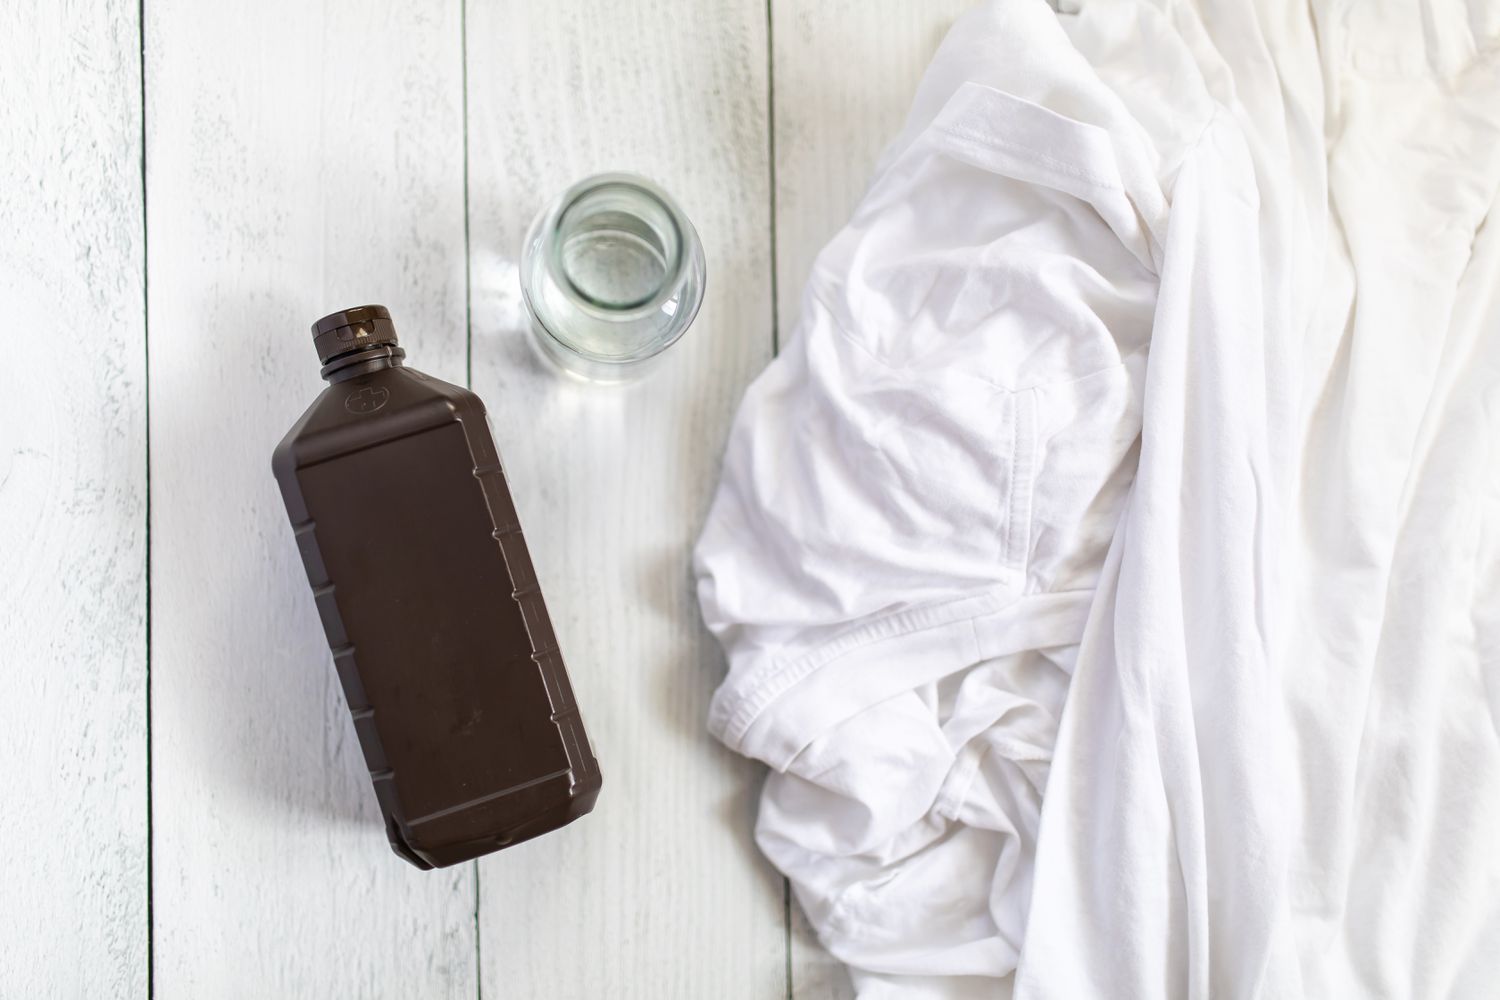 botella de agua oxigenada junto a ropa blanca